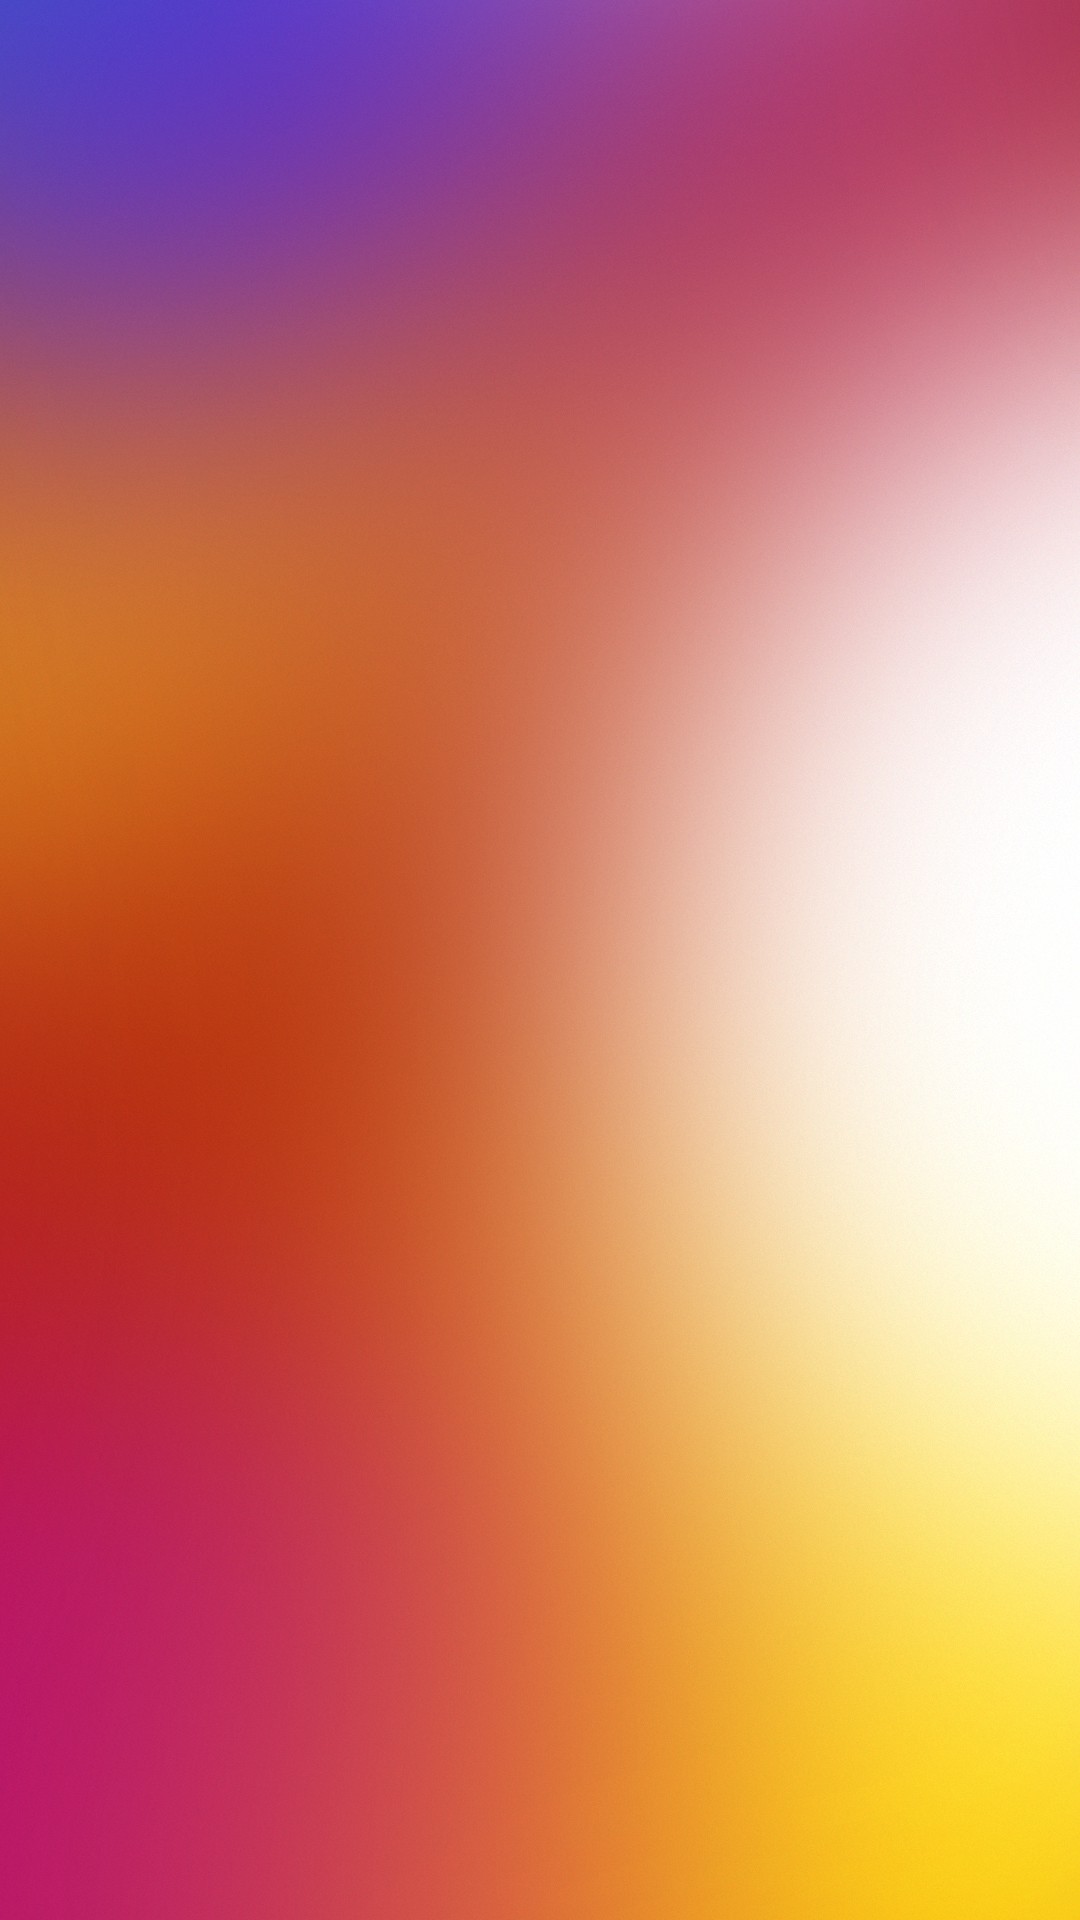 lenovo k5 note wallpaper hd,sky,orange,pink,red,yellow